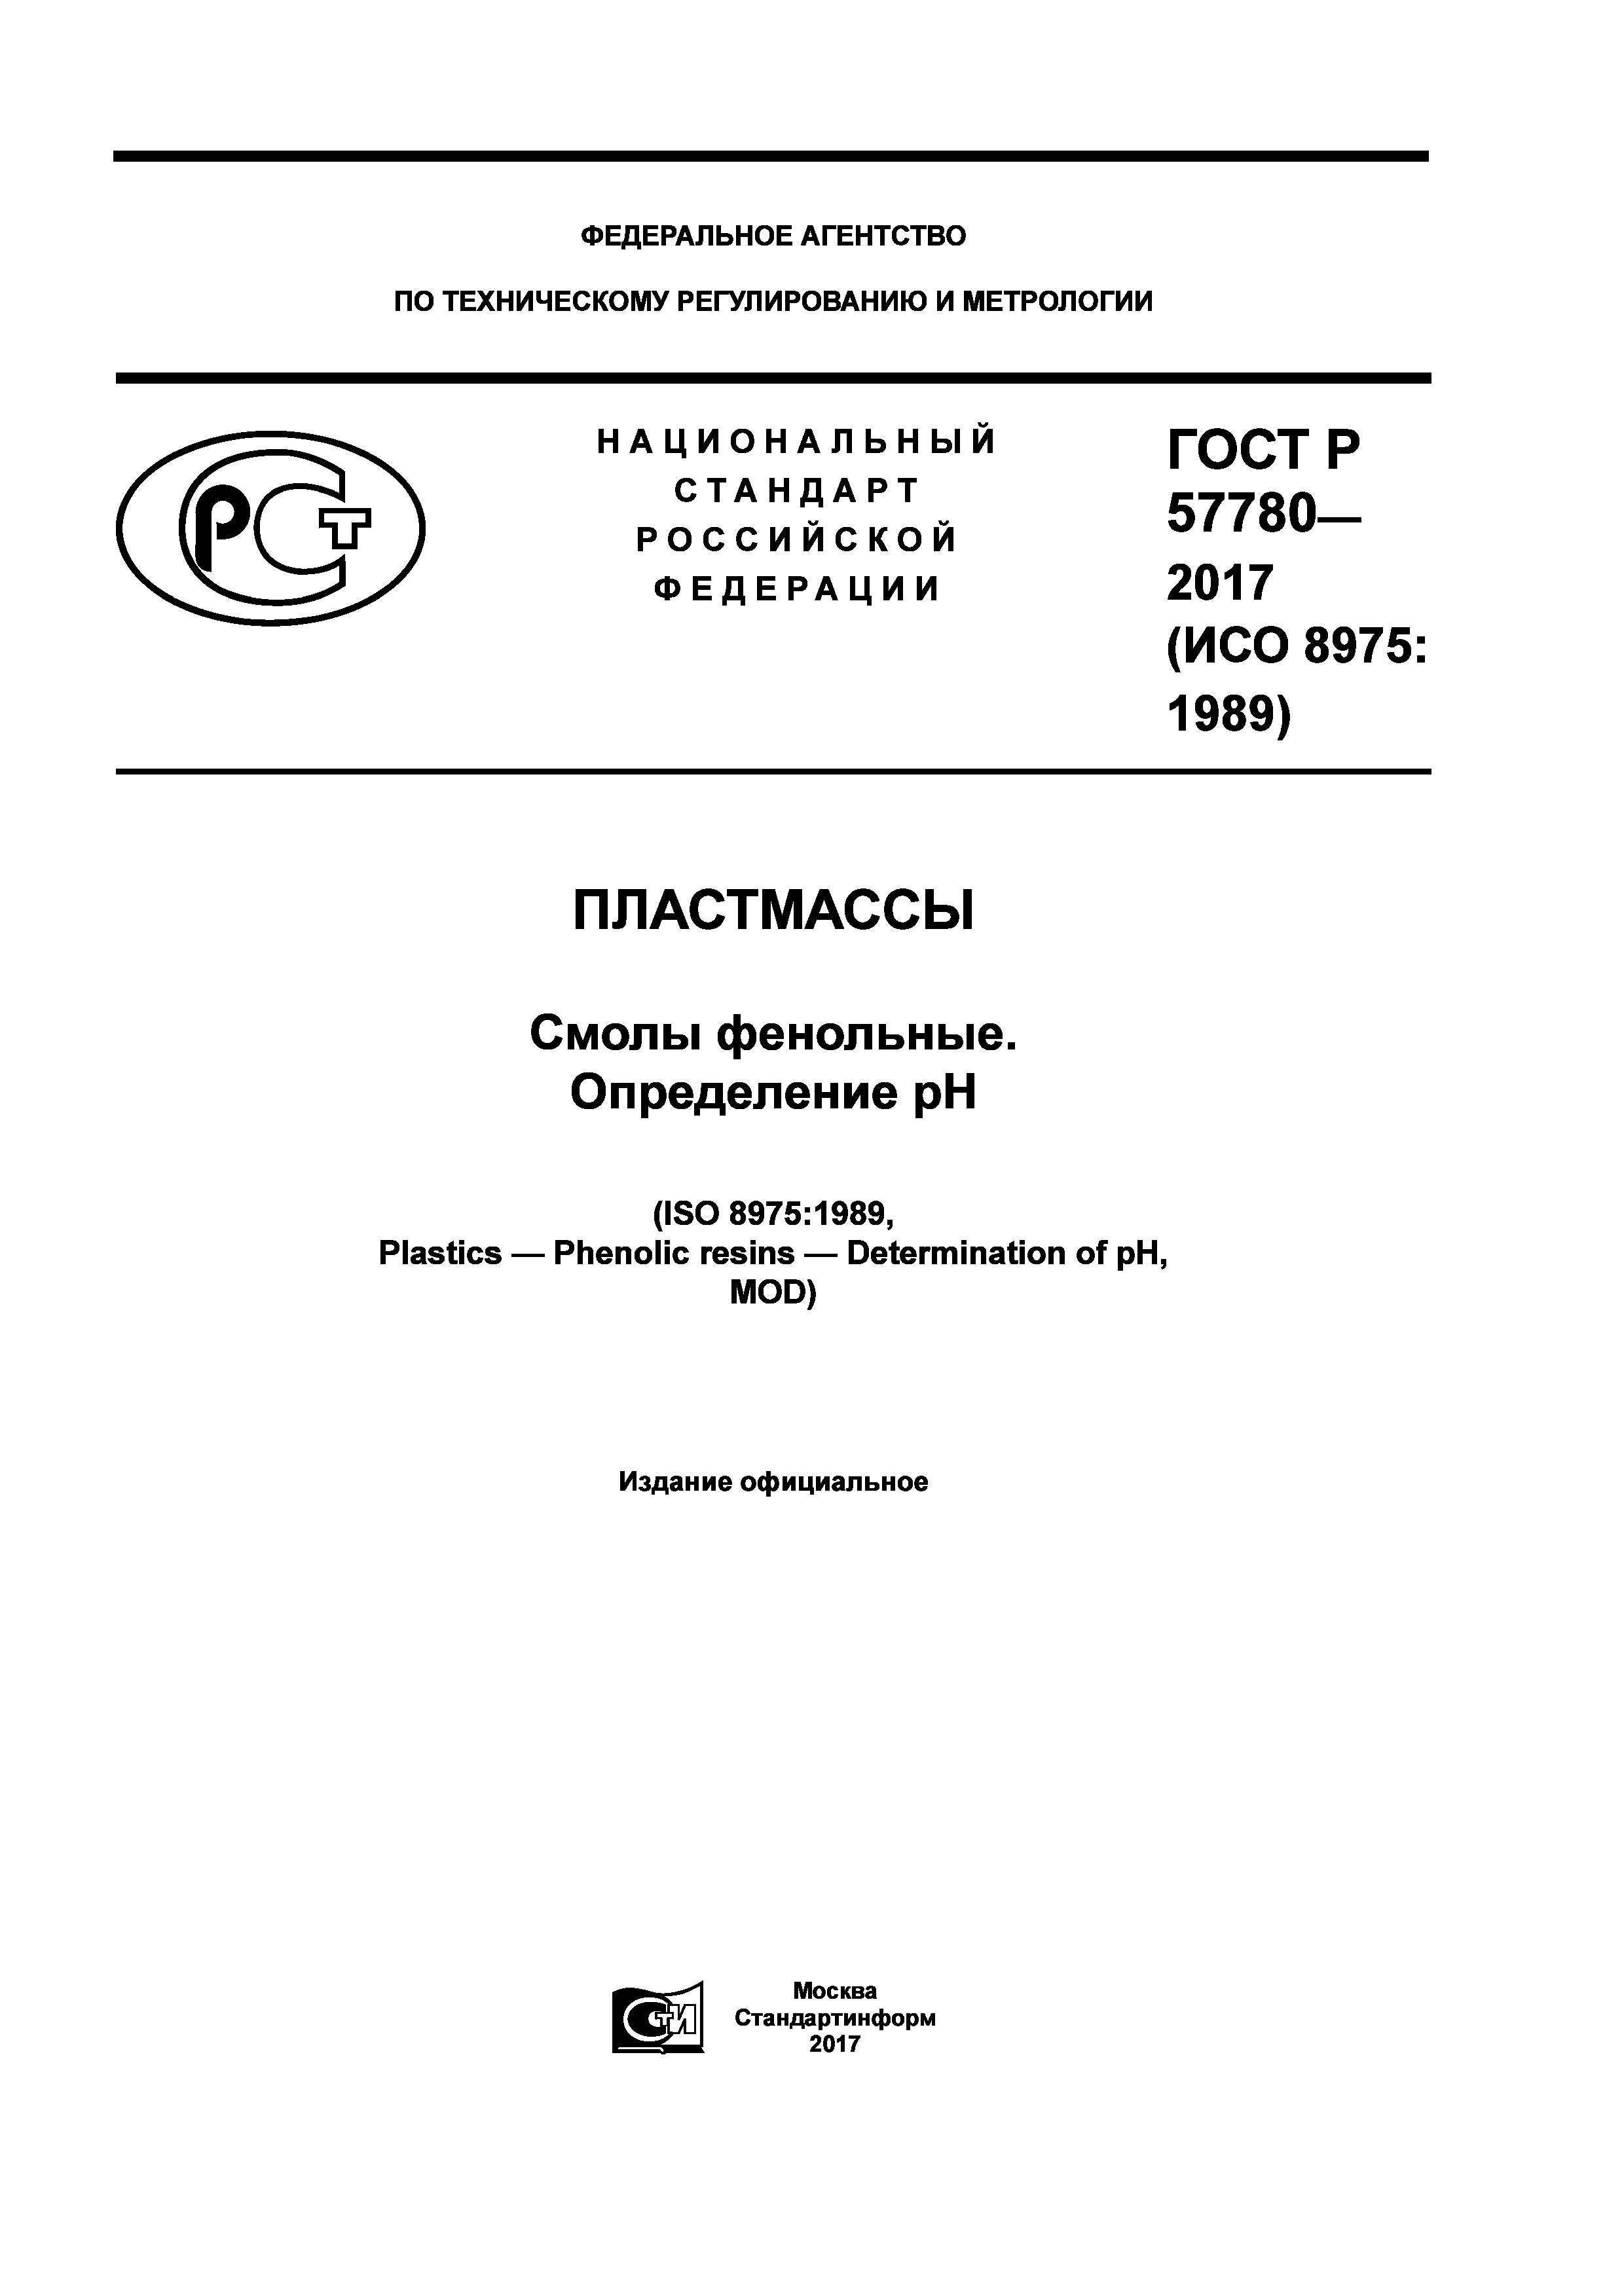 ГОСТ Р 57780-2017